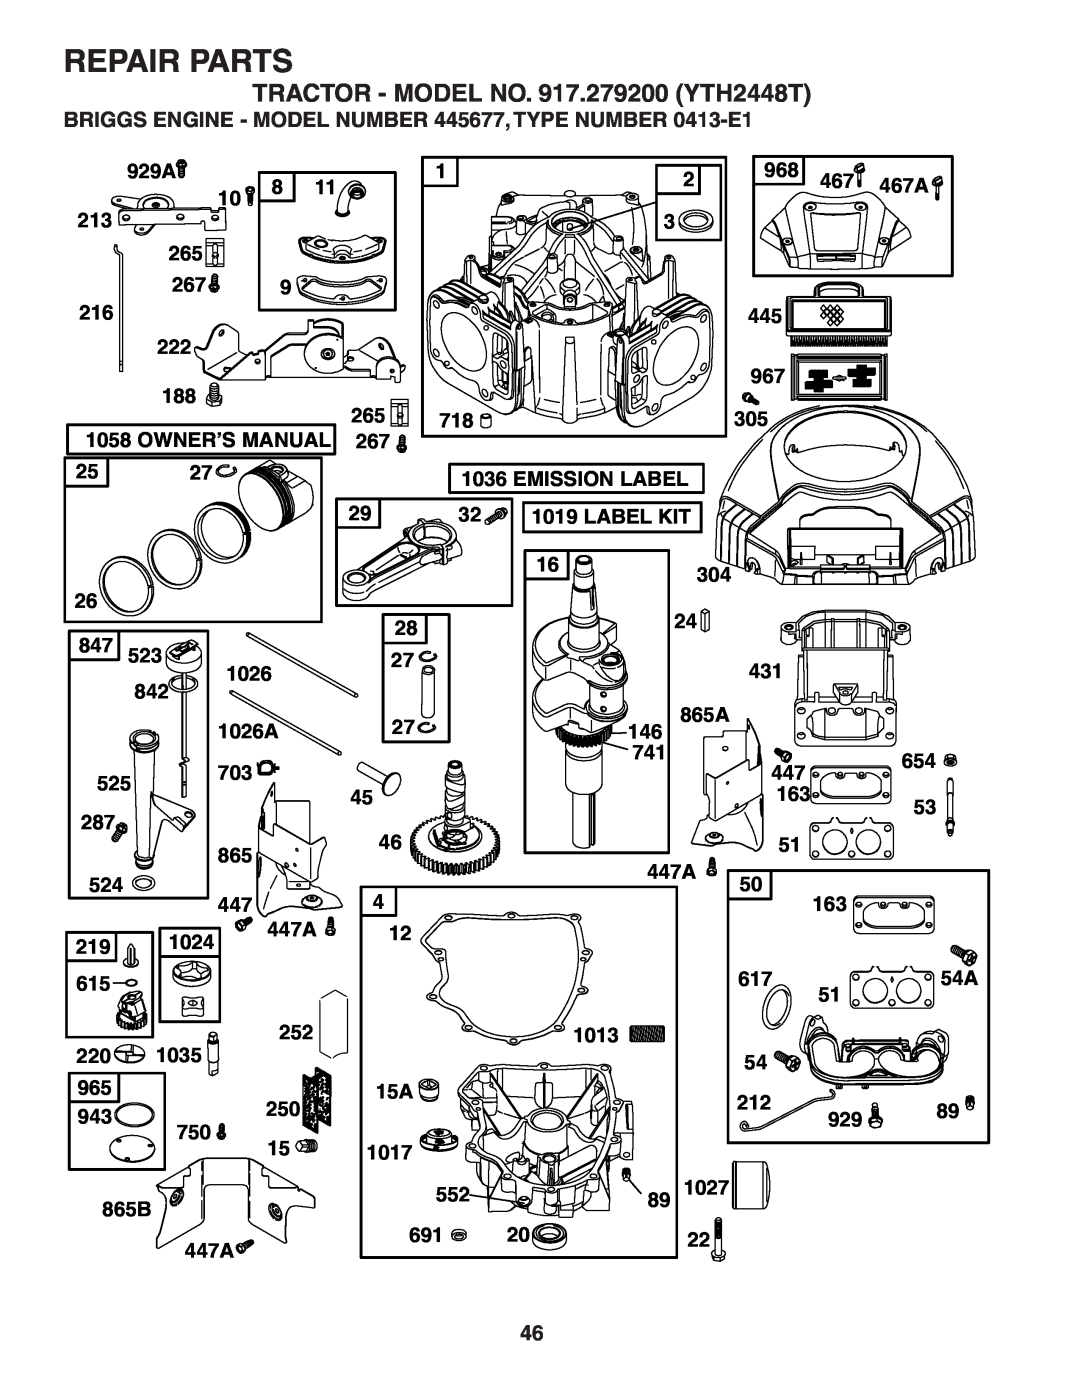 Husqvarna YTH2448T owner manual BRIGGS ENGINE - MODEL NUMBER 445677, TYPE NUMBER 0413-E1, Repair Parts, 865B 